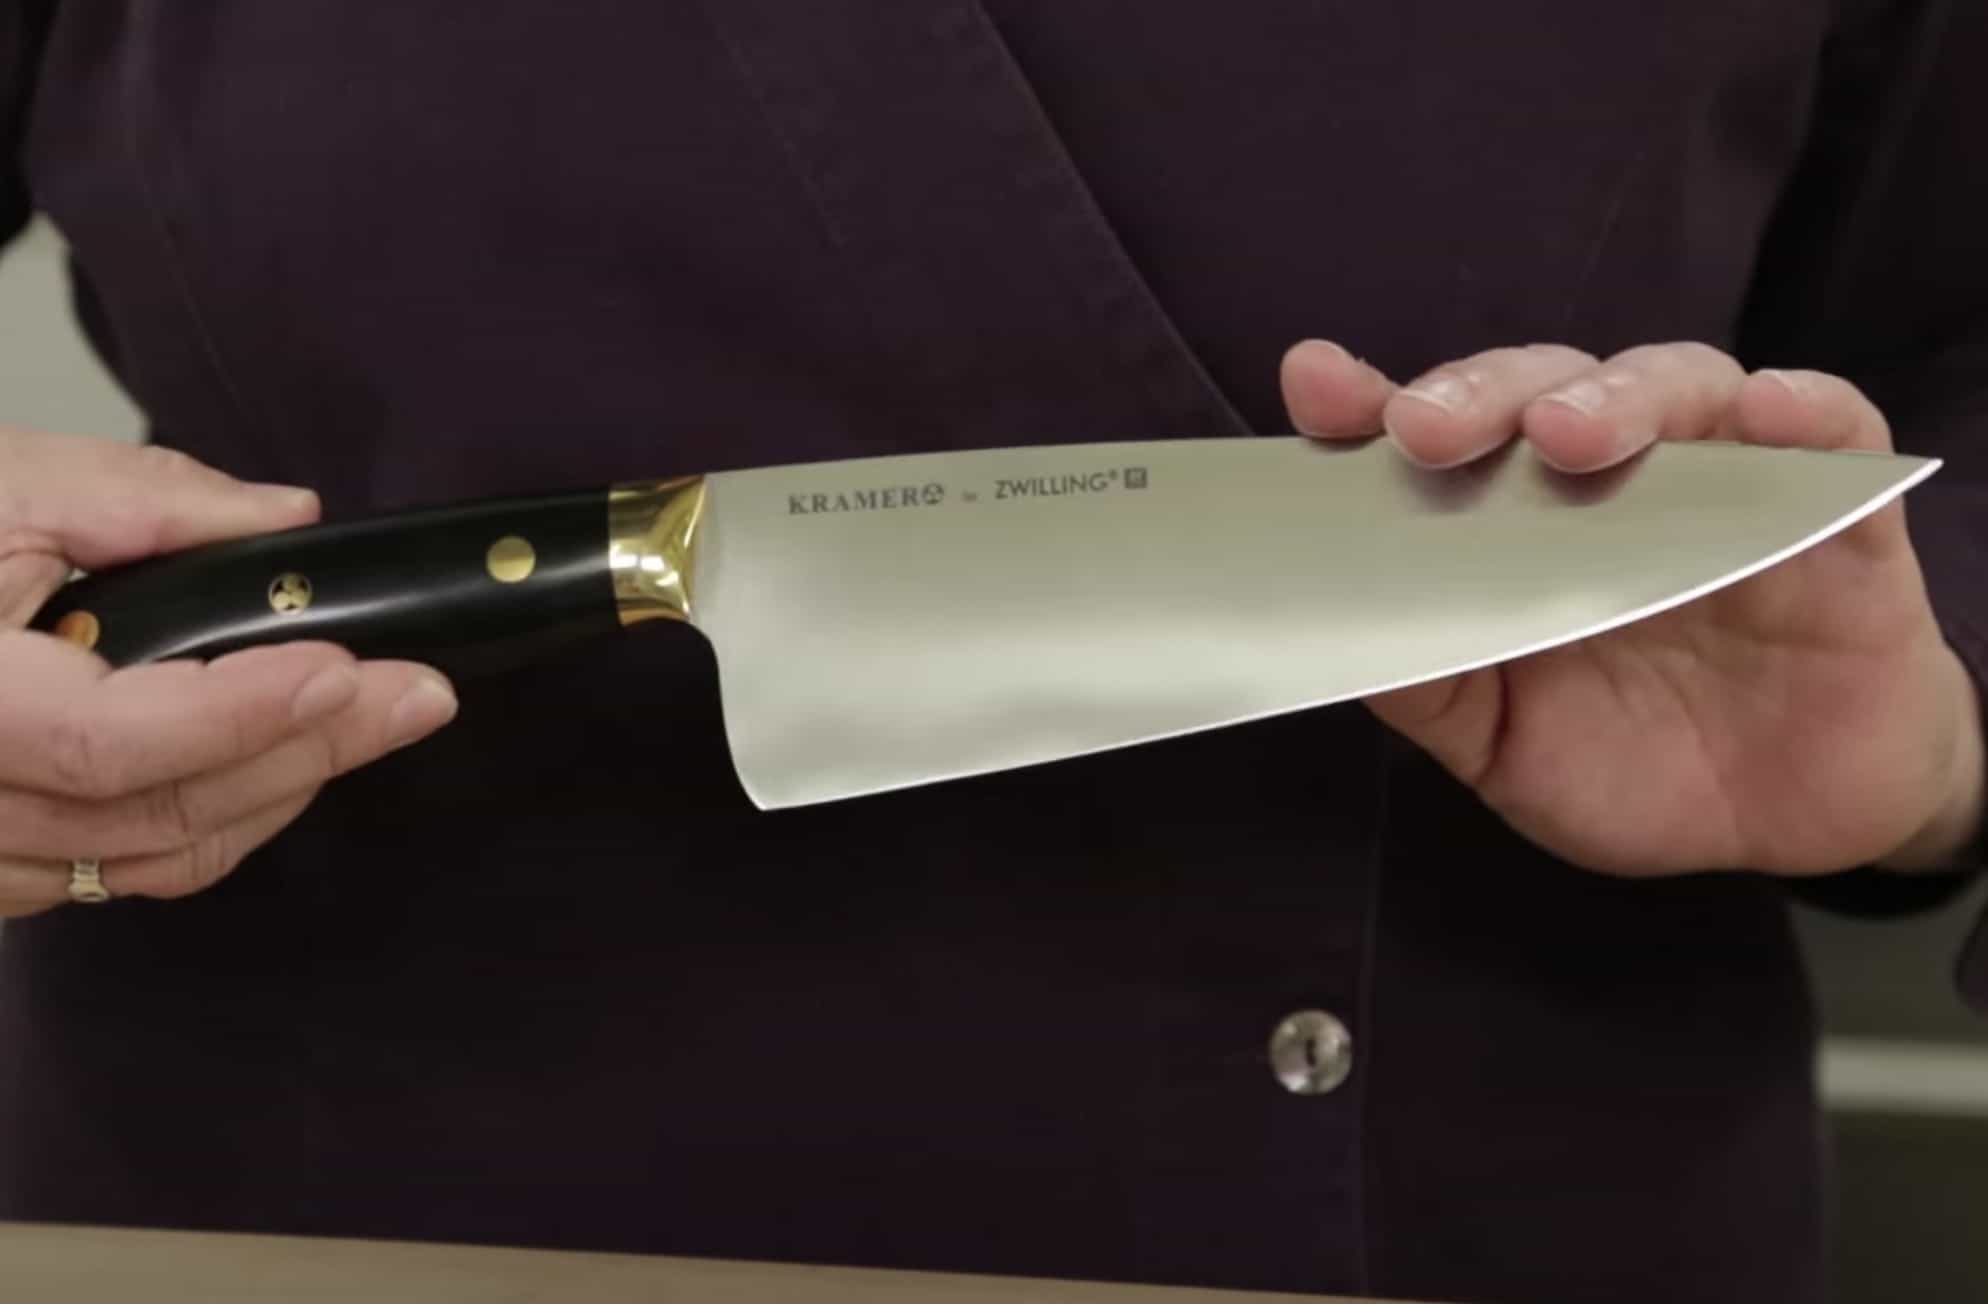 Bob Kramer by Zwilling J.A. Henckels Knife Sharpening Kit